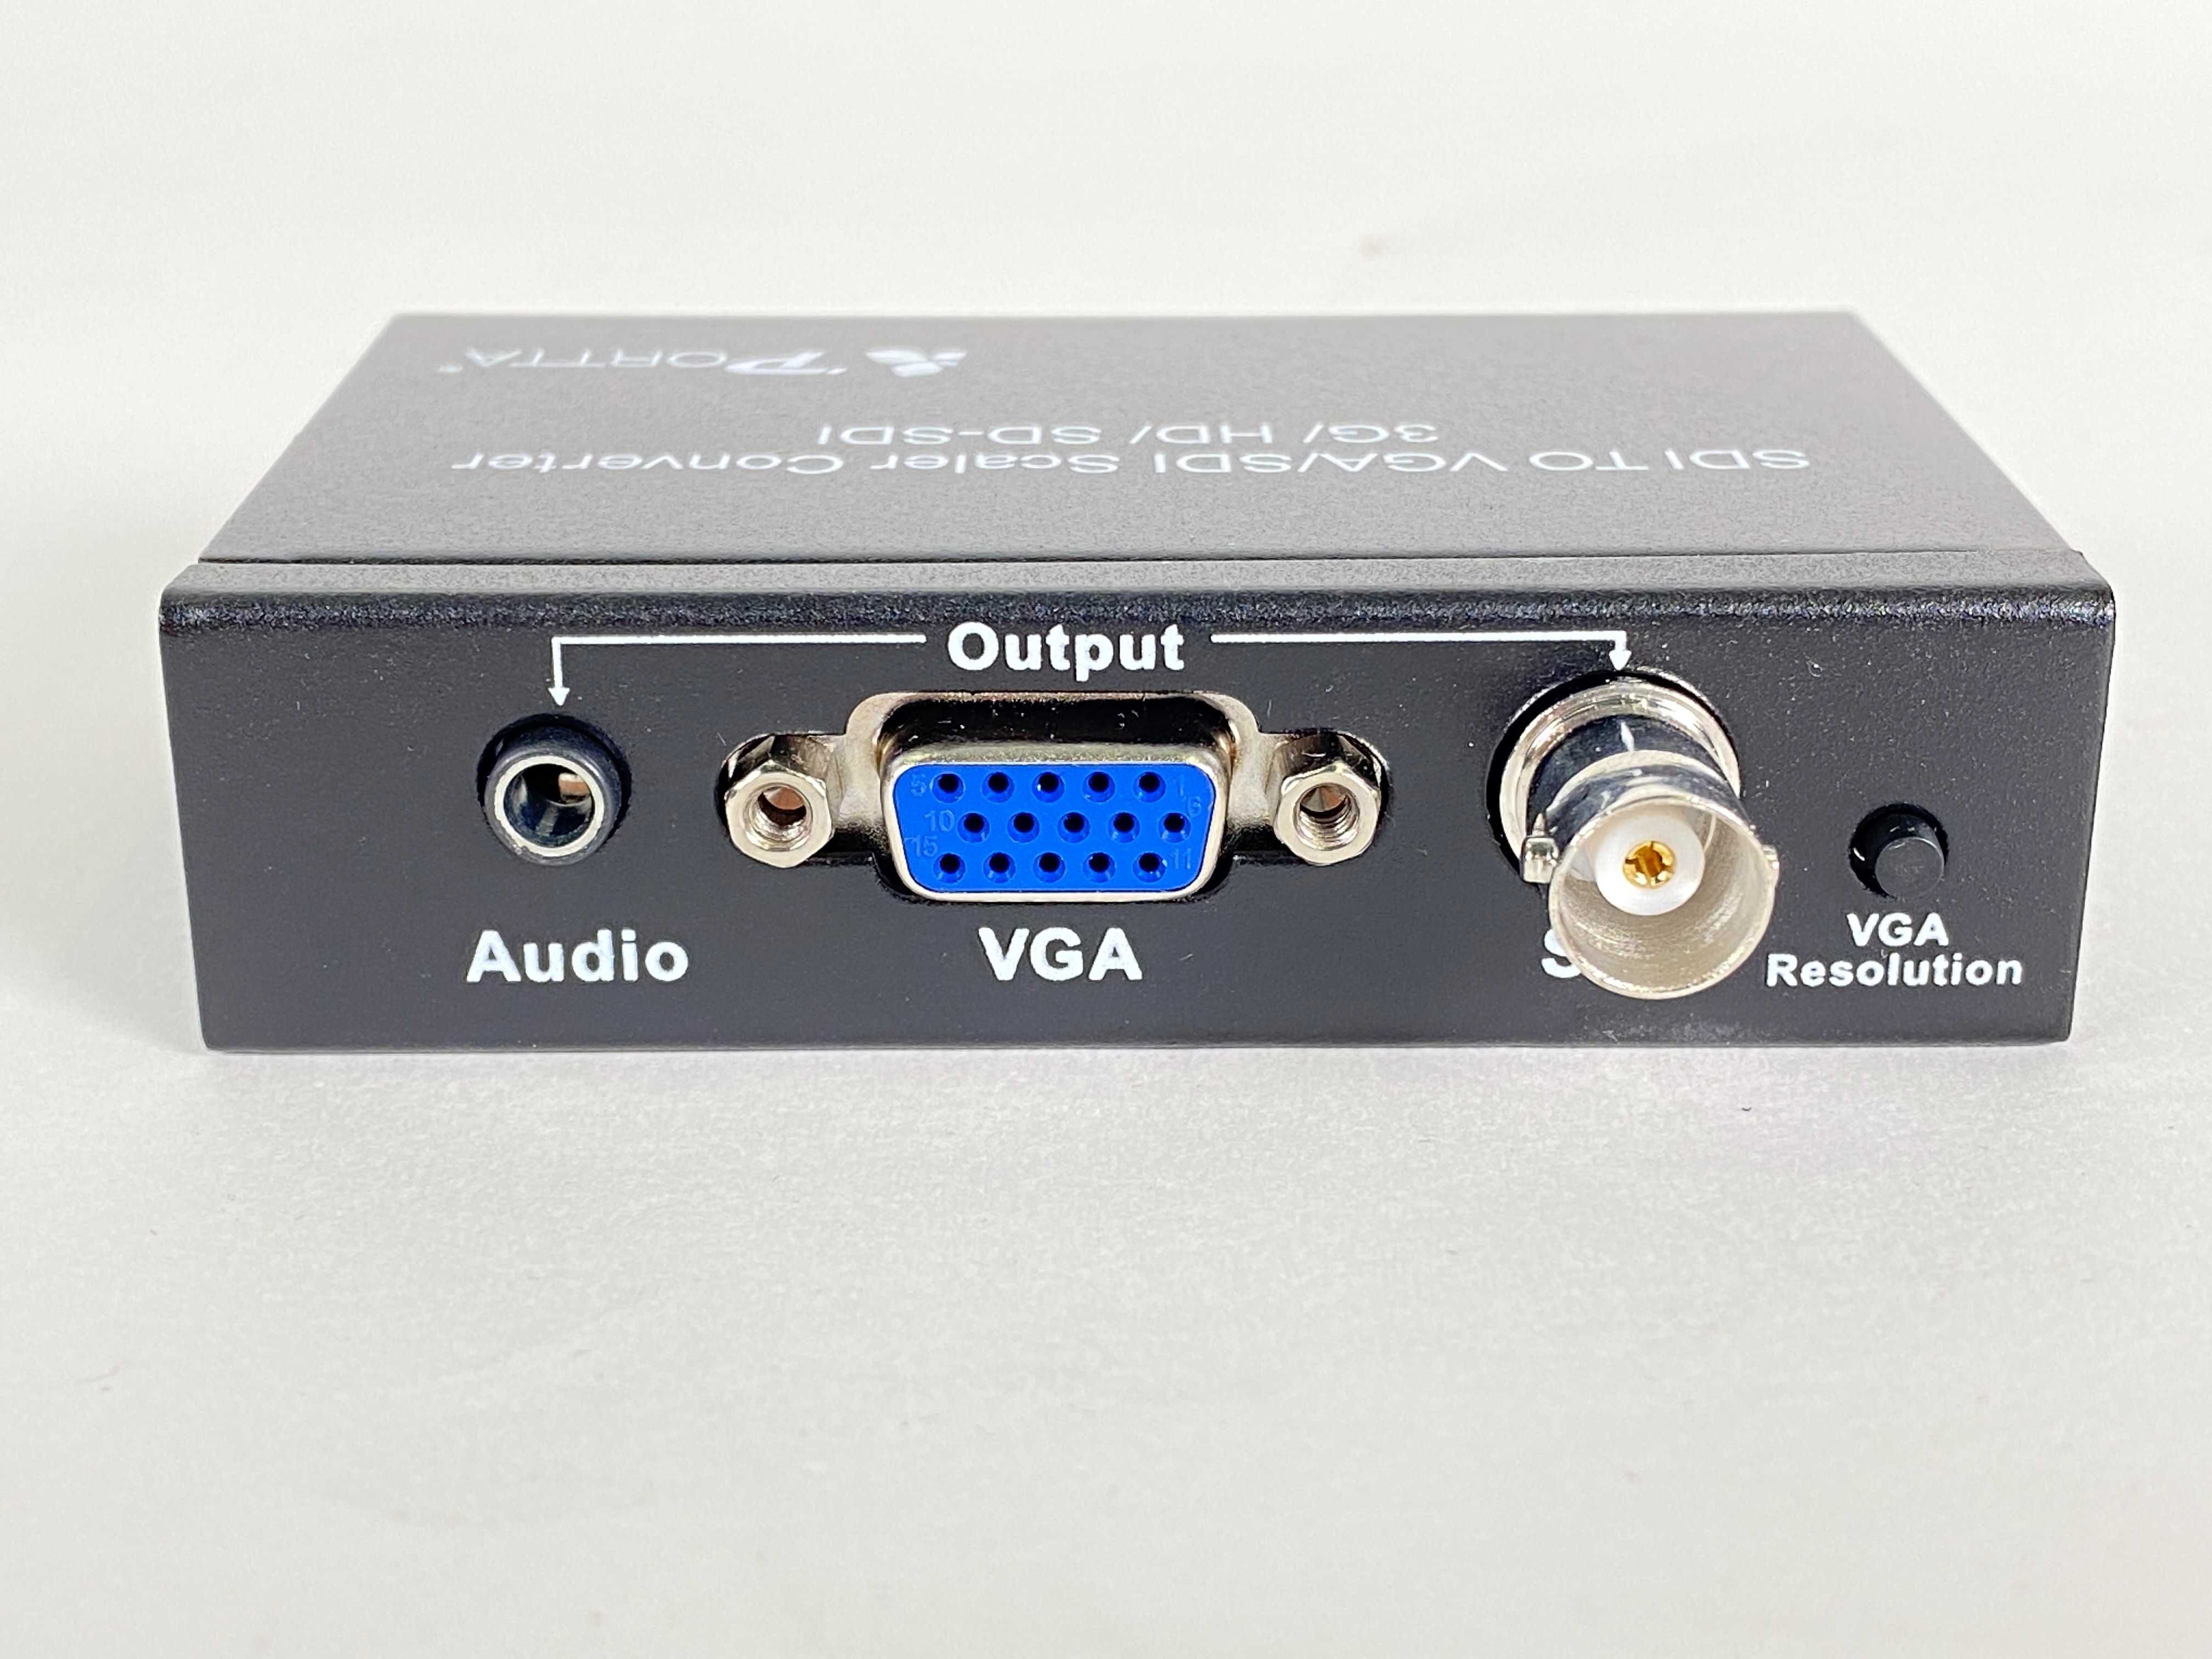 Conversor SDI to VGA BNC and audio